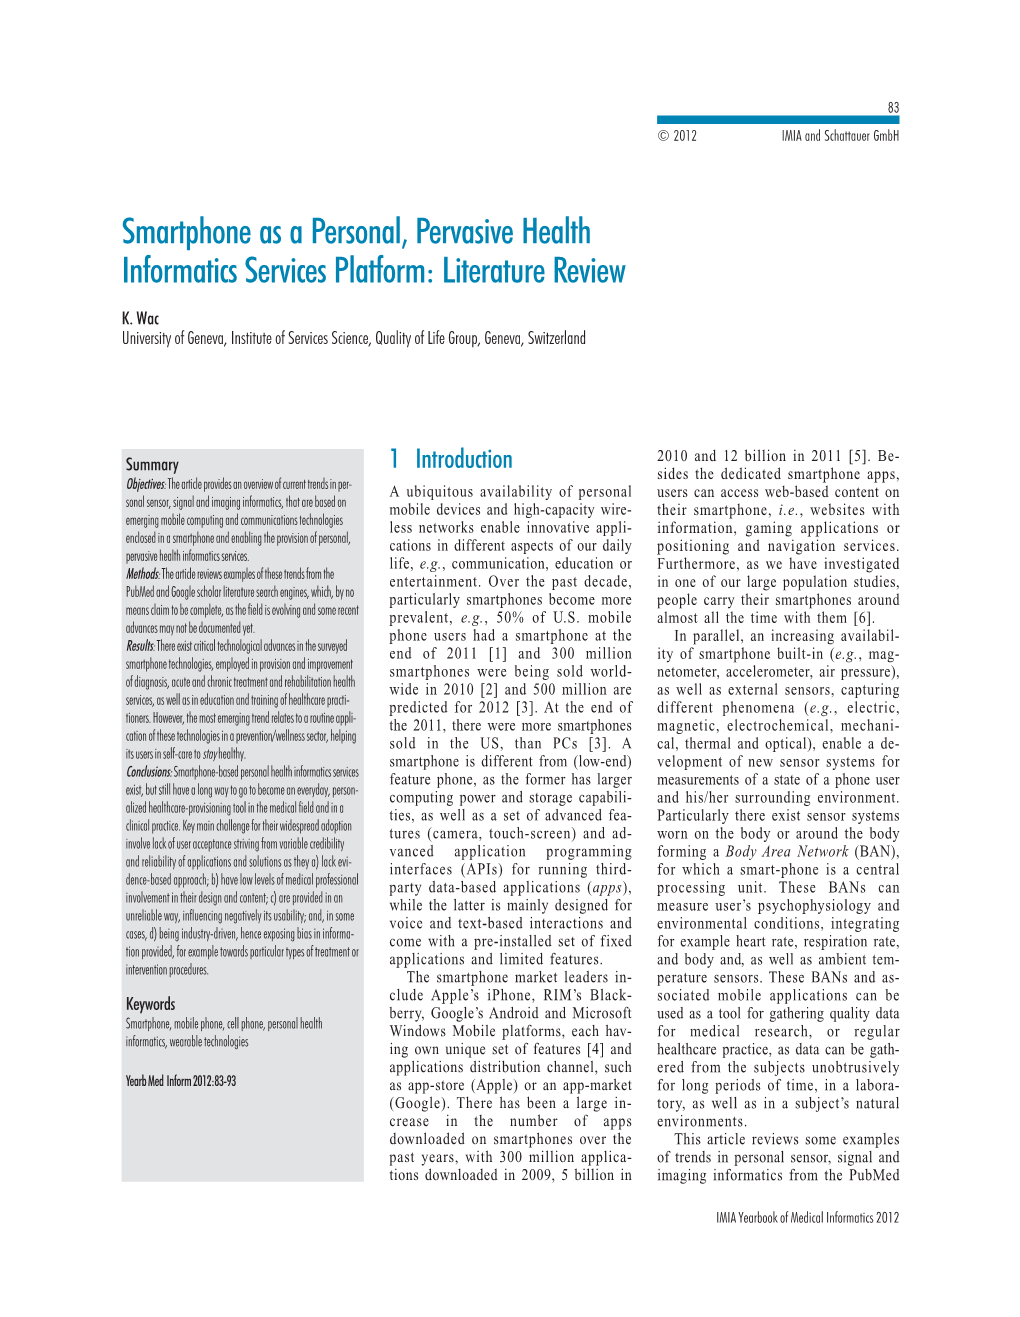 Smartphone As a Personal, Pervasive Health Informatics Services Platform: Literature Review